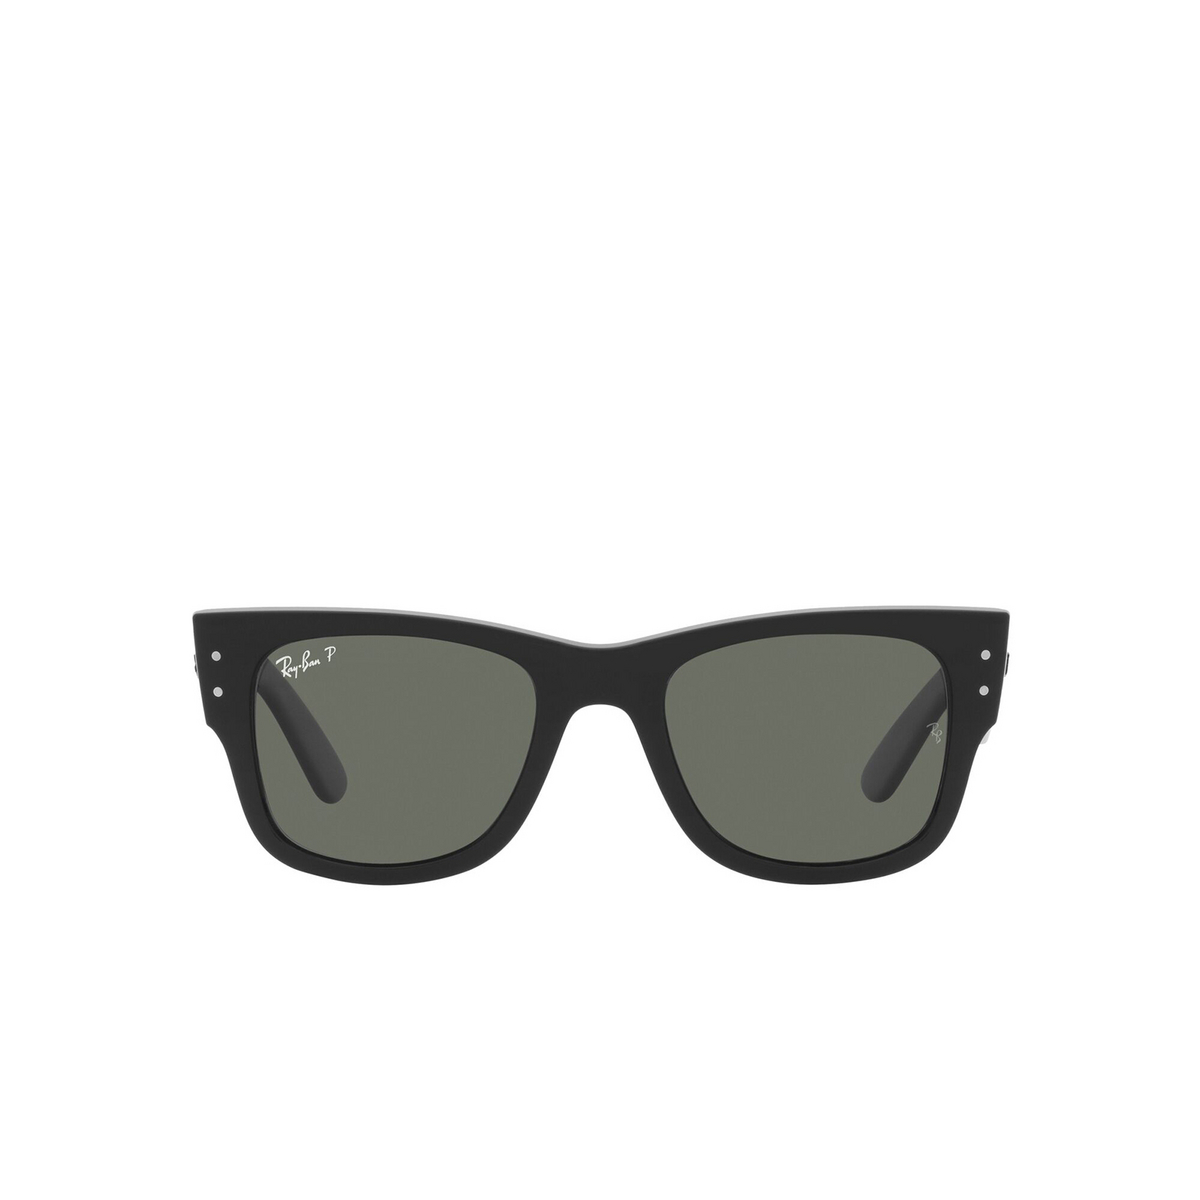 Ray-Ban MEGA WAYFARER Sunglasses 901/58 Nero - front view